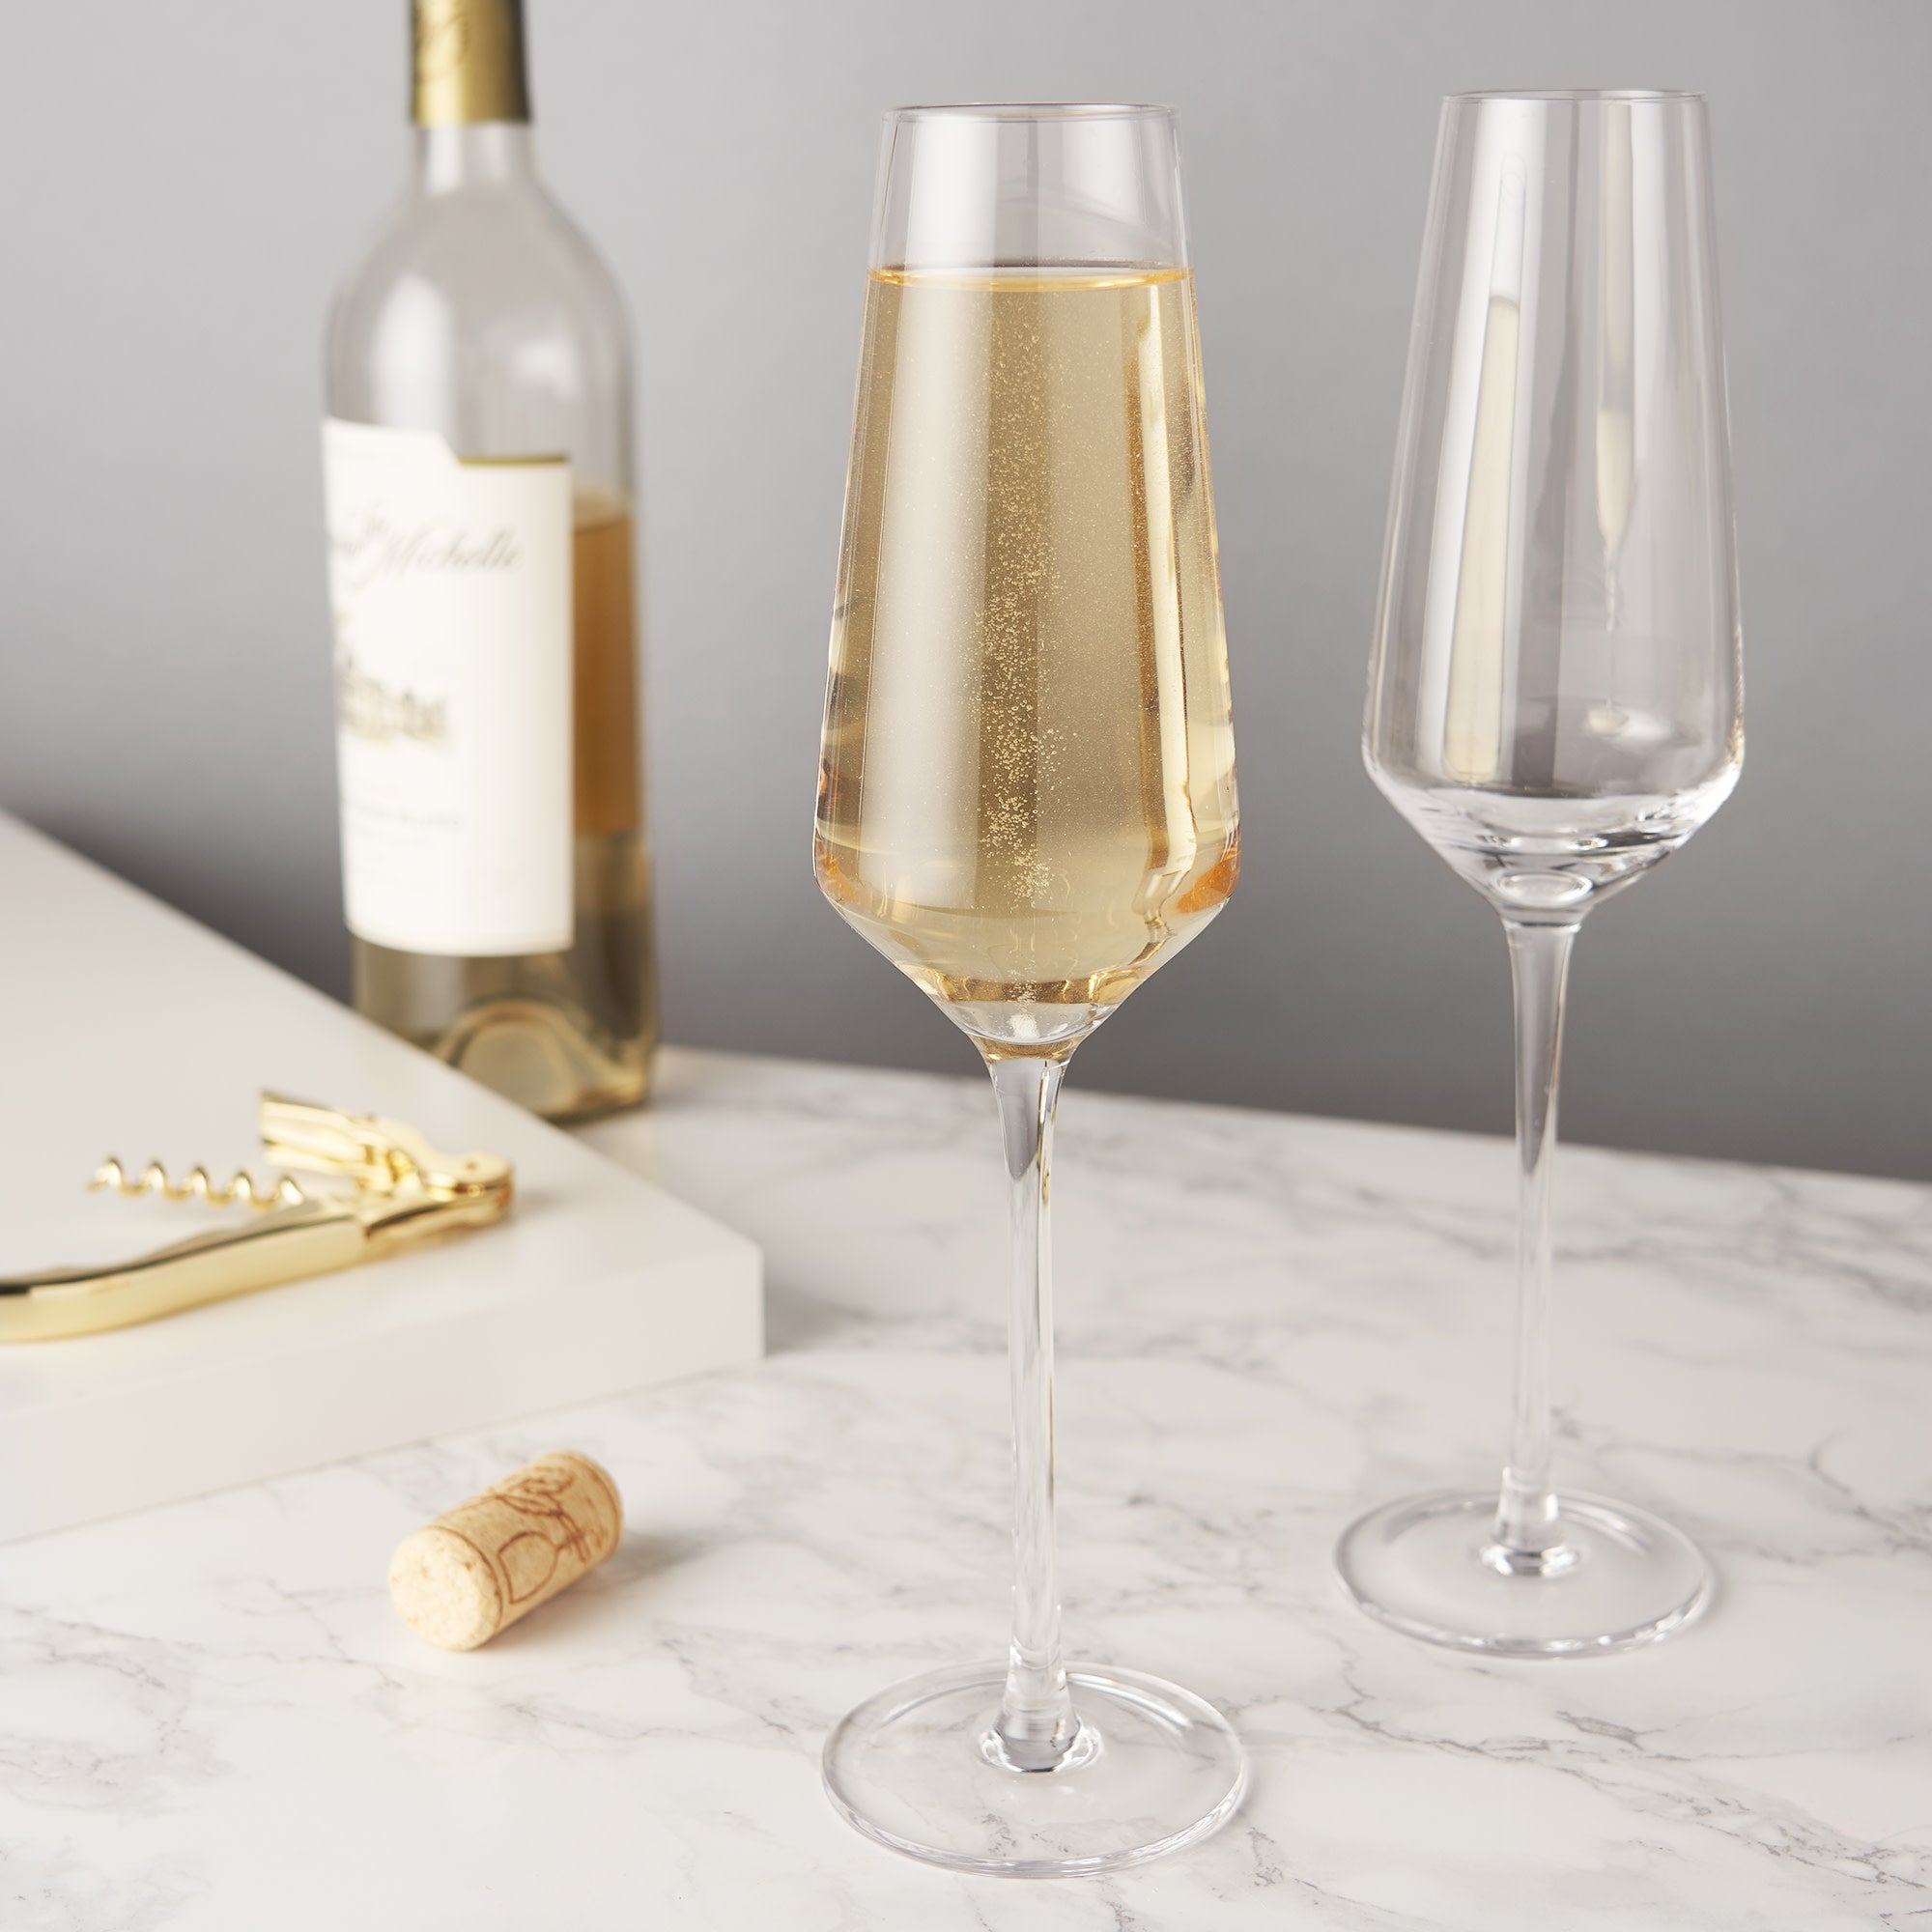 Viski Raye Faceted Crystal Champagne Flutes - Stemless Champagne